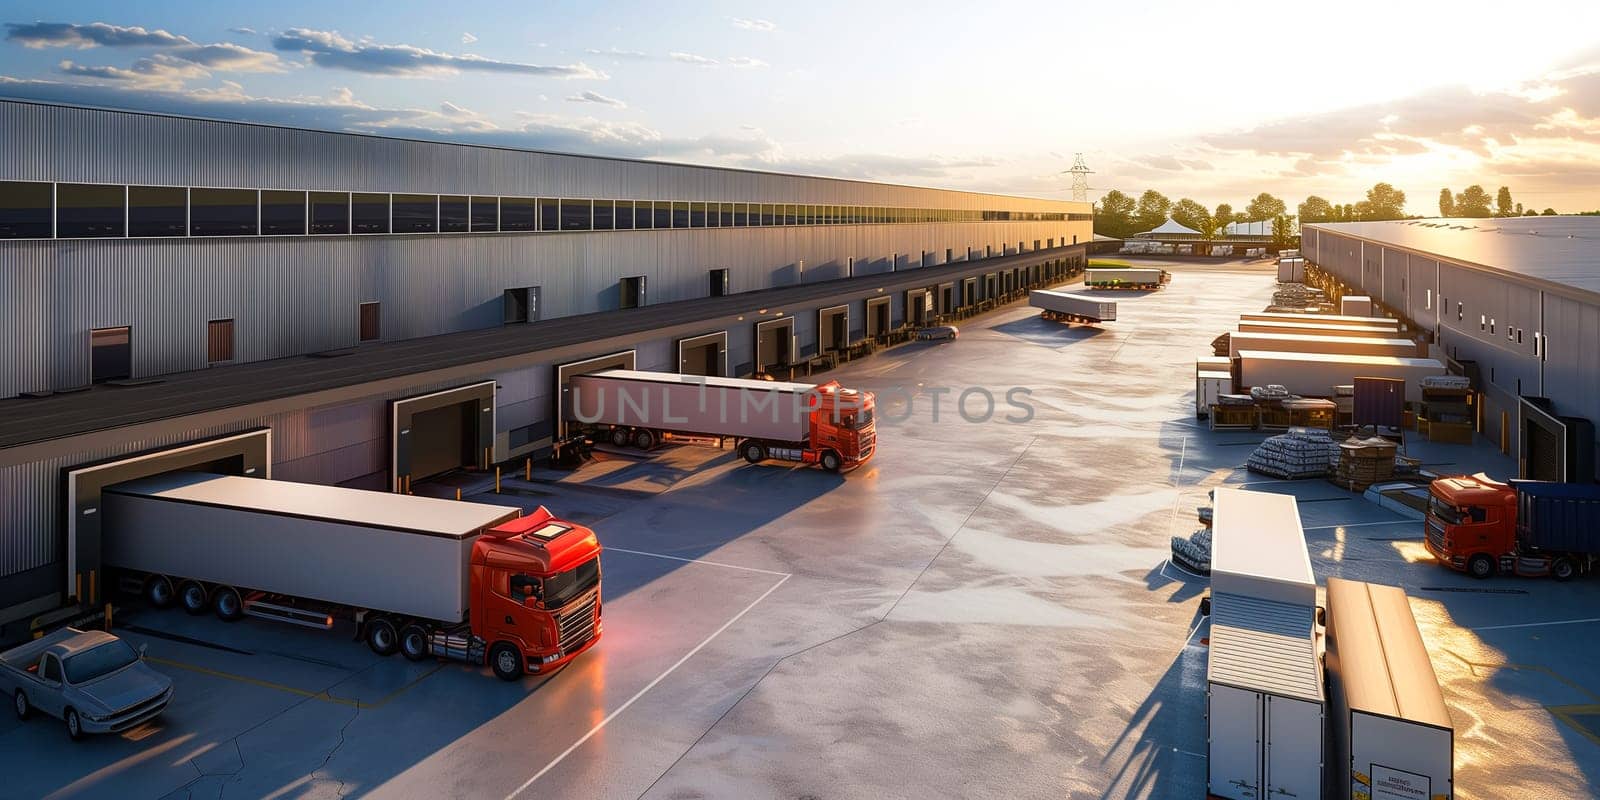 Semi Trailer Trucks on The Parking Lot. Trucks Loading at Dock Warehouse. by sarymsakov